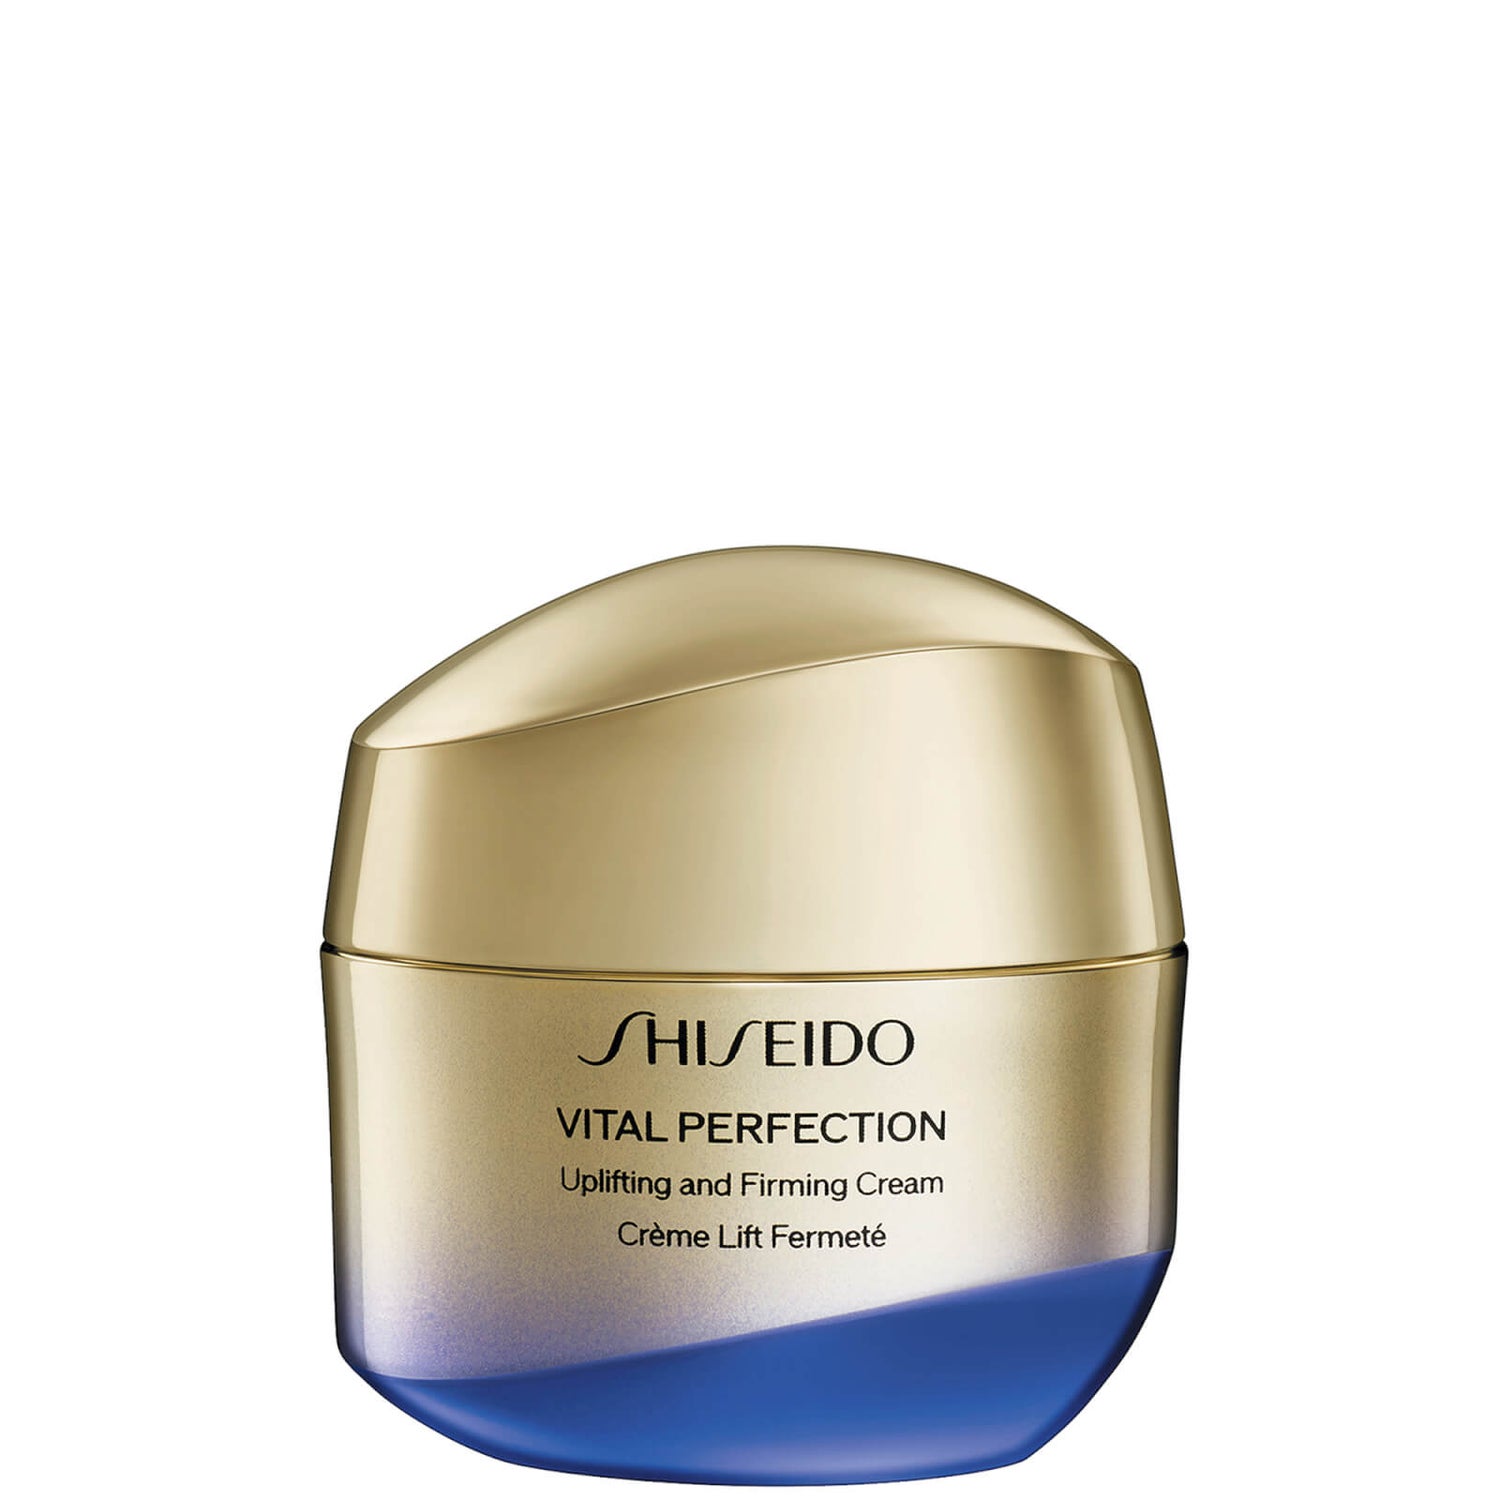 Shiseido firming. Шисейдо Витал Перфекшн. Шисейдо Vital perfection Uplifting. Shiseido Vital perfection аналог. Шисейдо Витал Перфекшн крем для глаз как открыть.